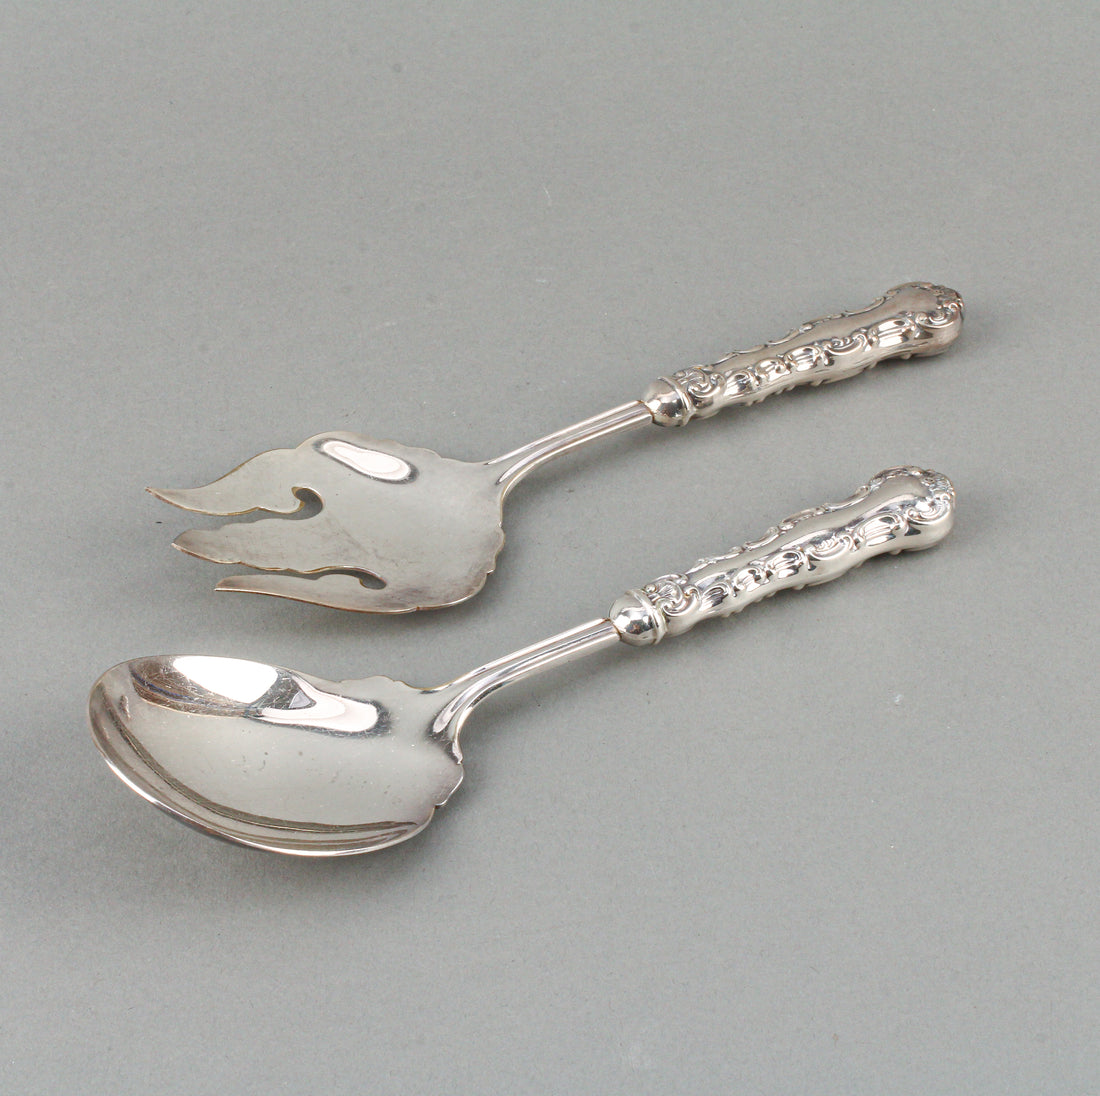 BIRKS Pompadour Sterling Silver Handle Silverplate Serving Spoon & Fork